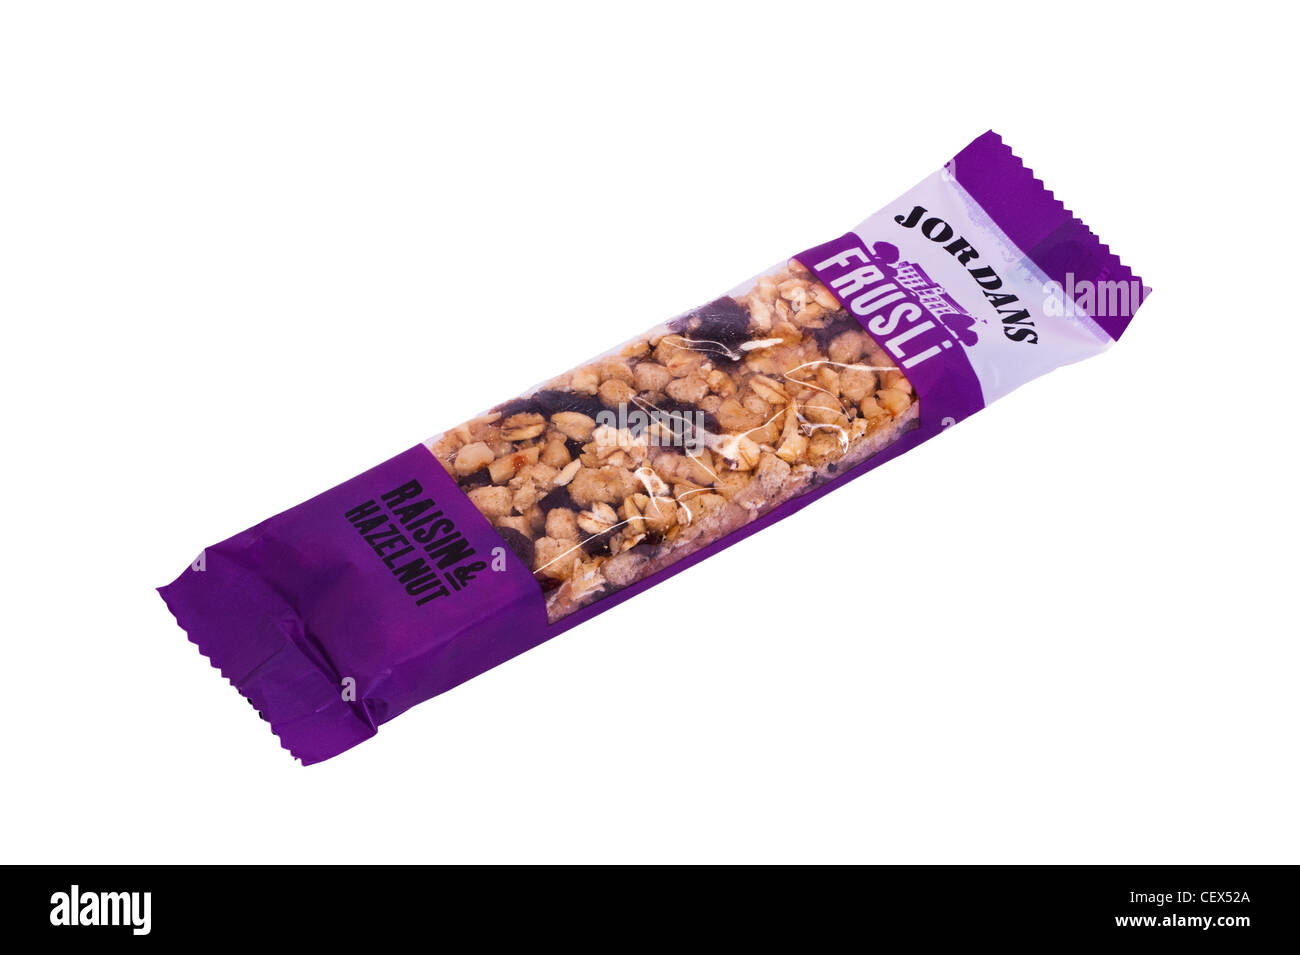 A Jordans Frusli cereal bar on a white background Stock Photo - Alamy